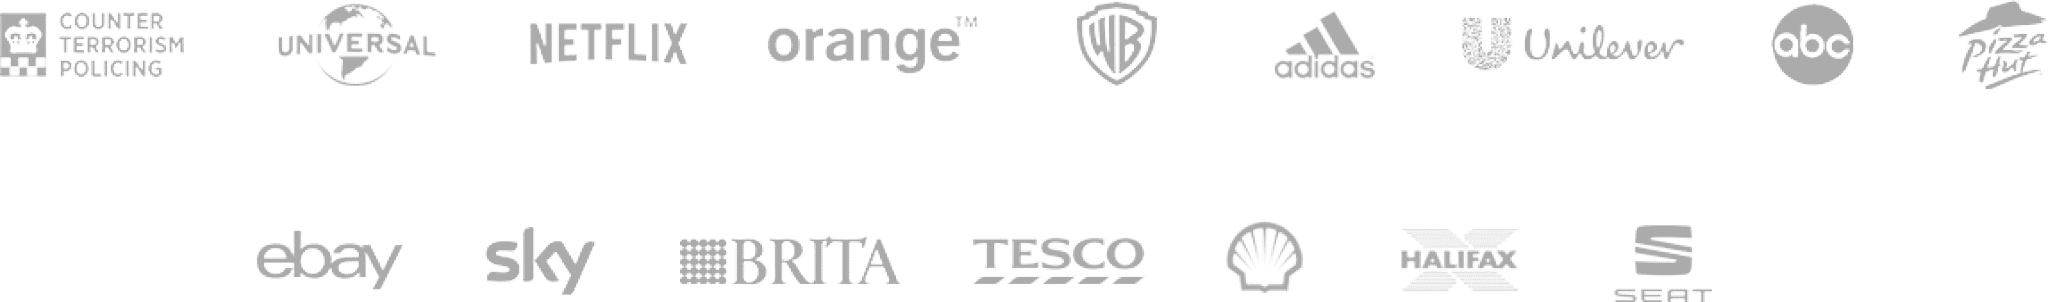 ex.co case study logos